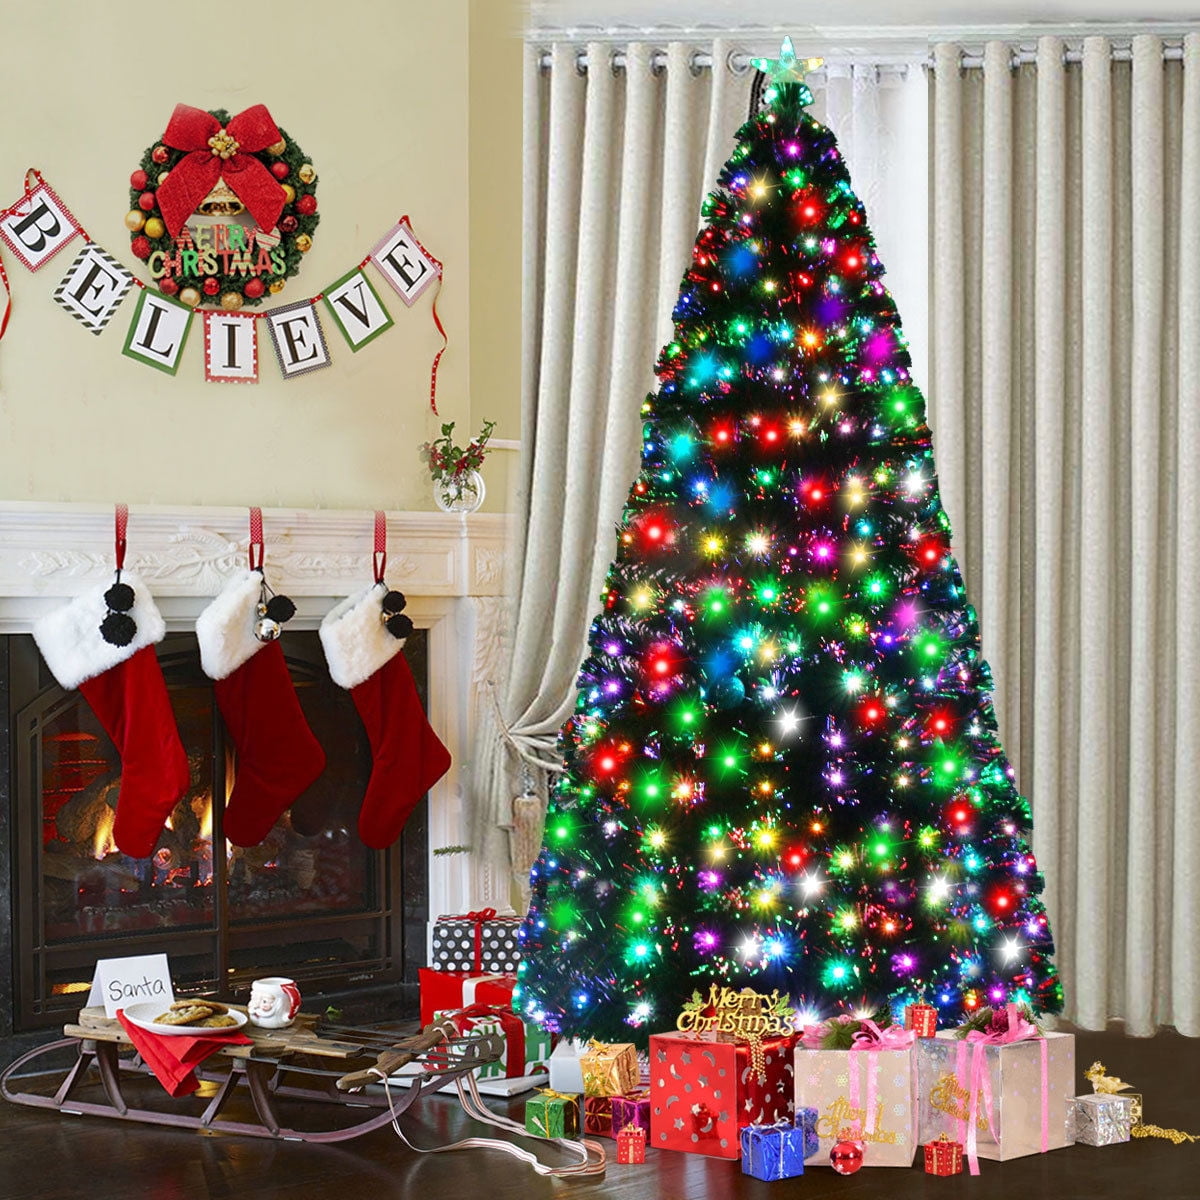 Hobby Lobby Christmas tree sales are available 